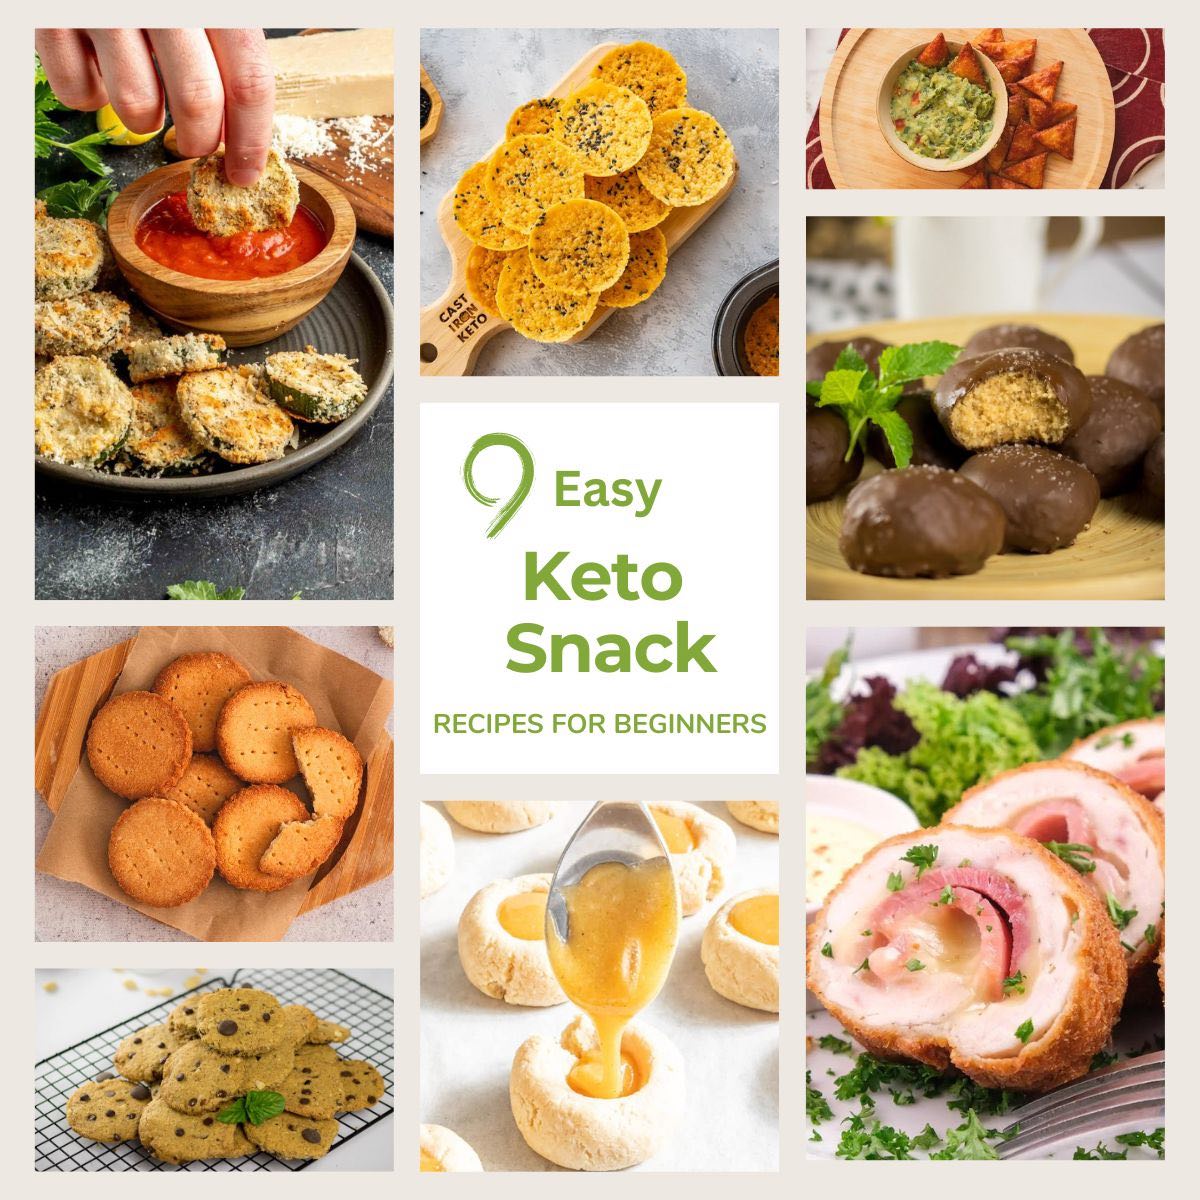 9 Easy Keto Snack Recipes for Beginners